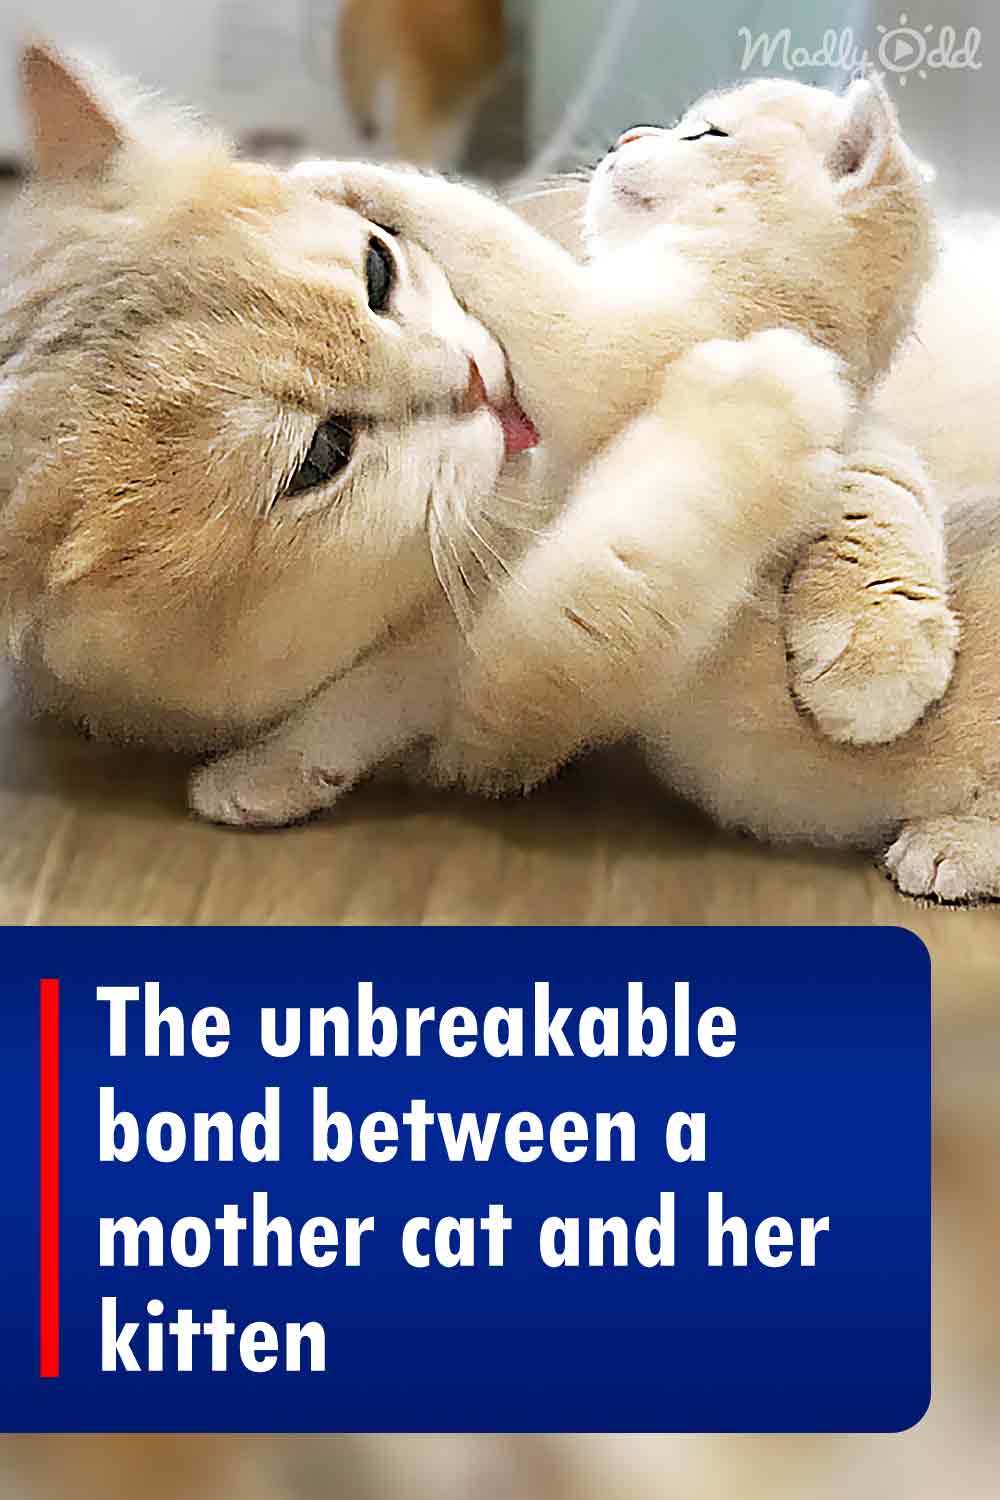 The unbreakable bond between a mother cat and her kitten